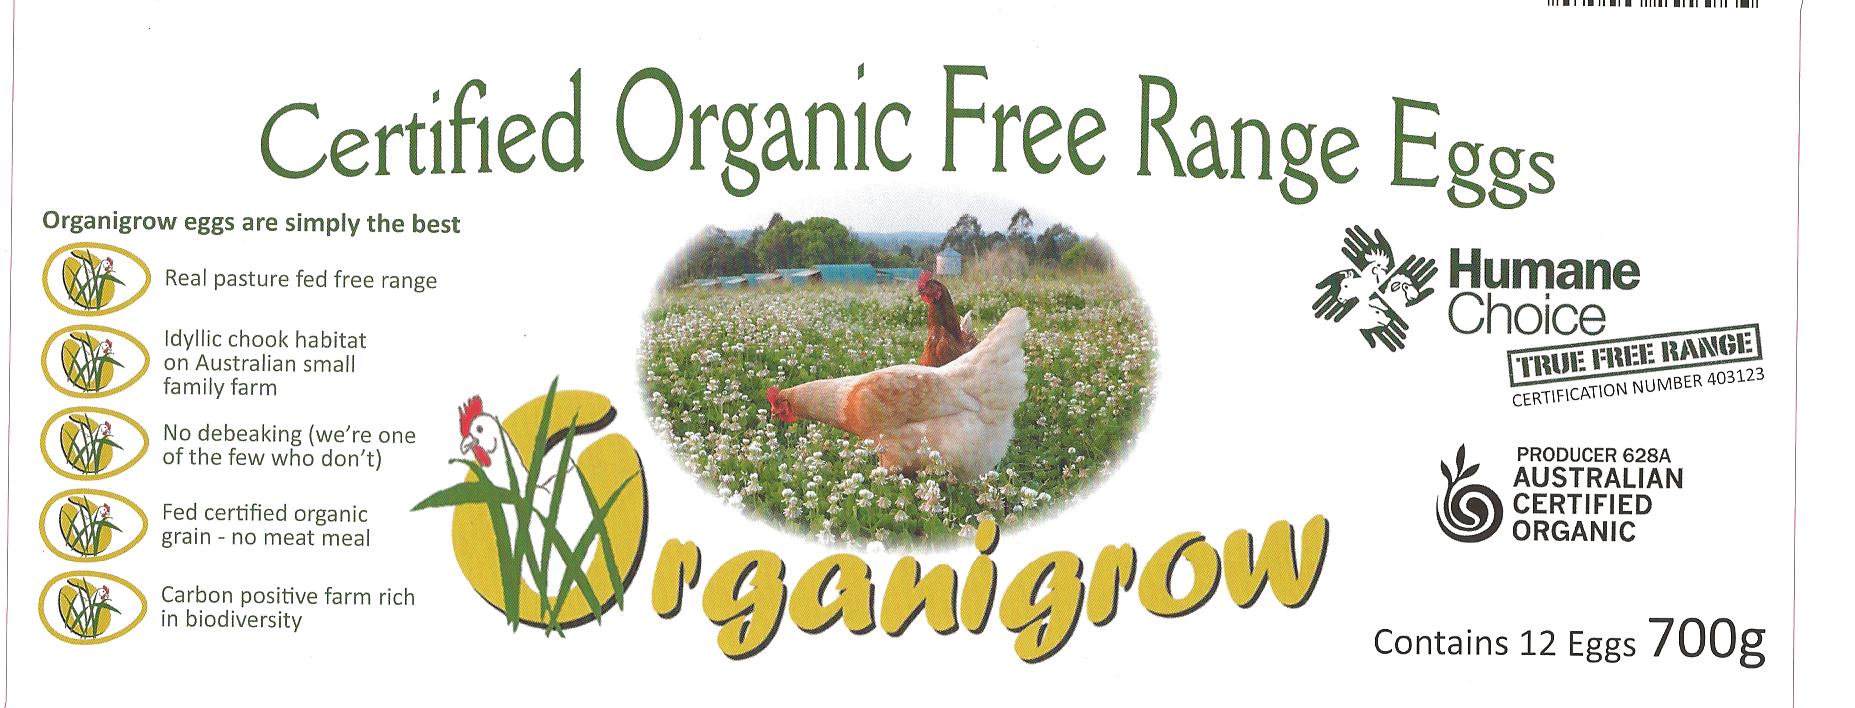 certified organic free range eggs